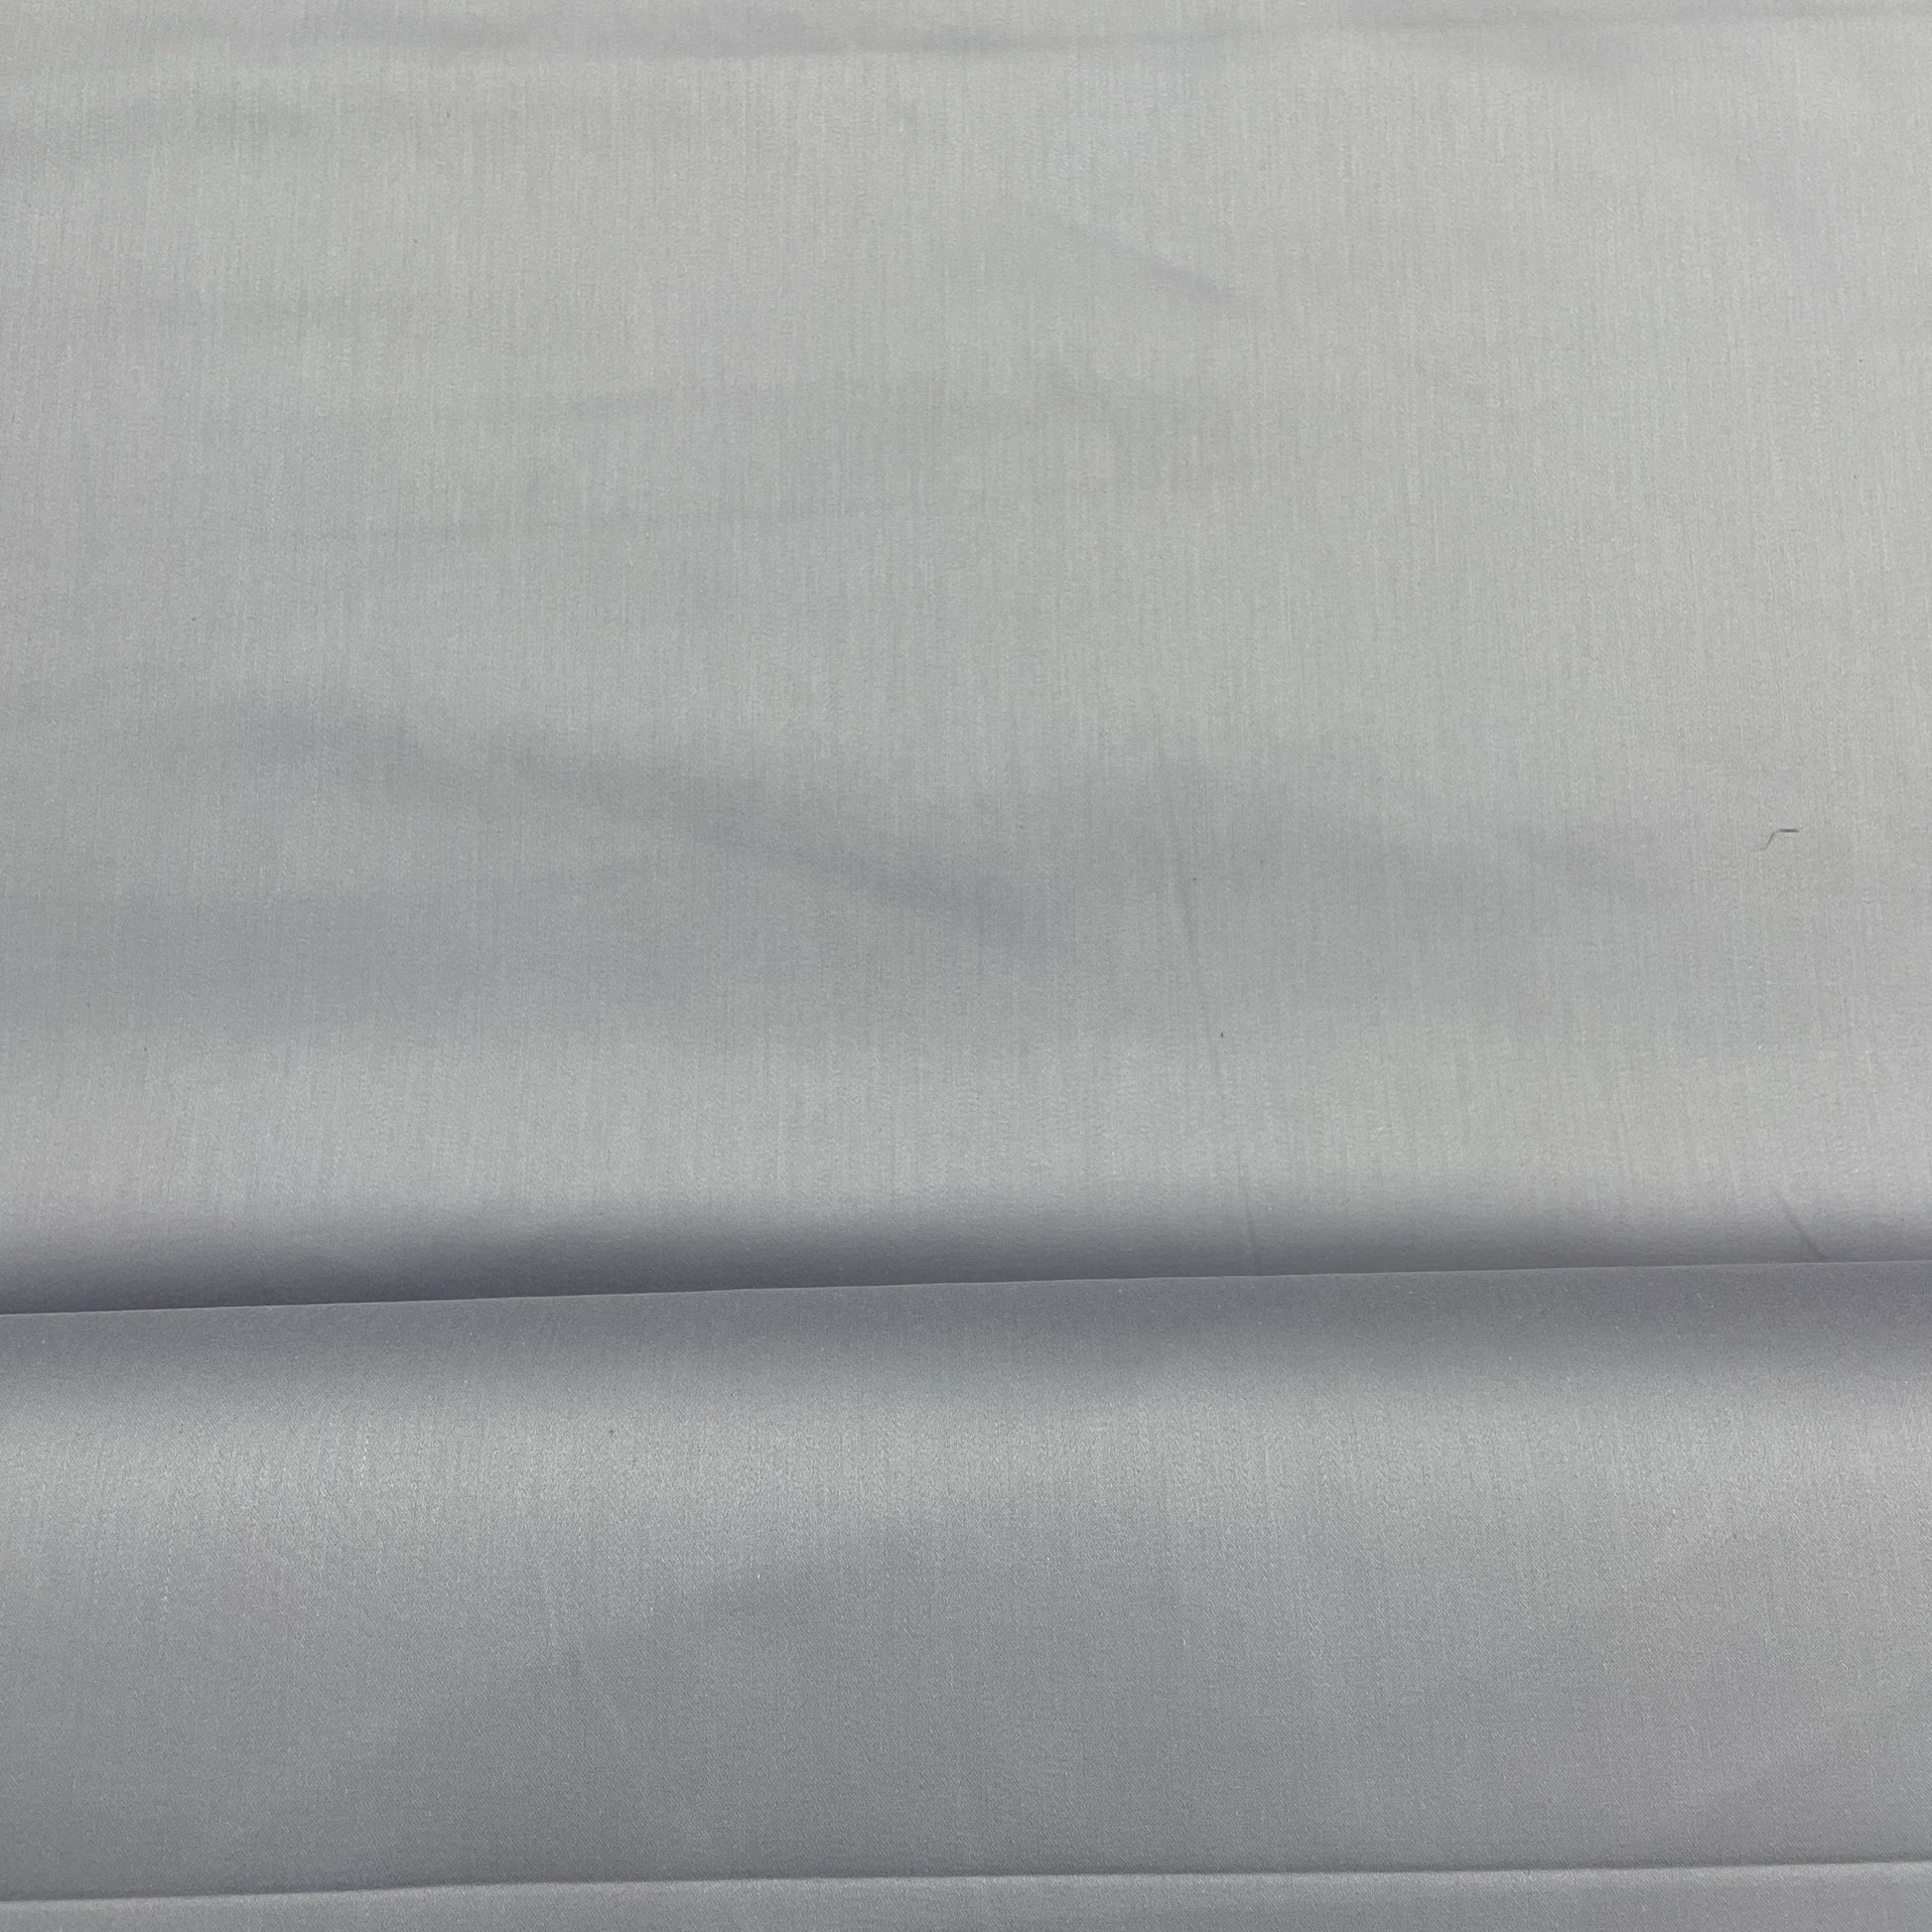 Buy Premium Grey Solid Filmore Lycra Fabric Online at TradeUNO